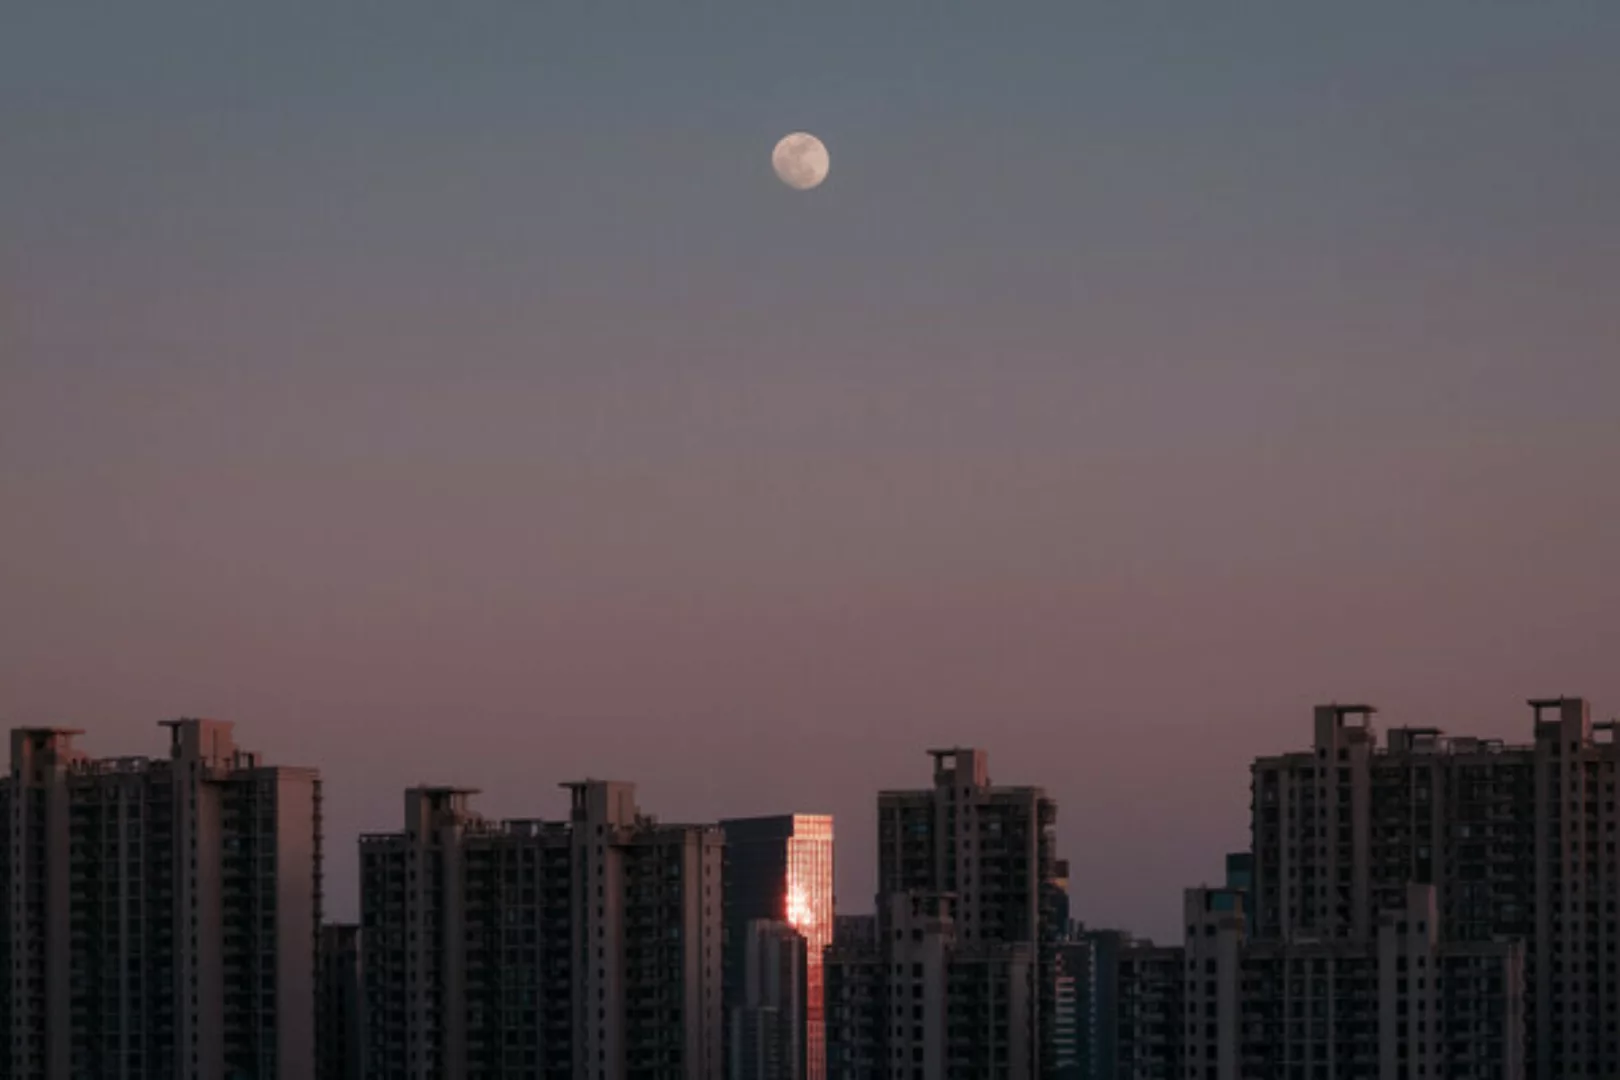 Poster / Leinwandbild - Shanghai Moonbeams günstig online kaufen